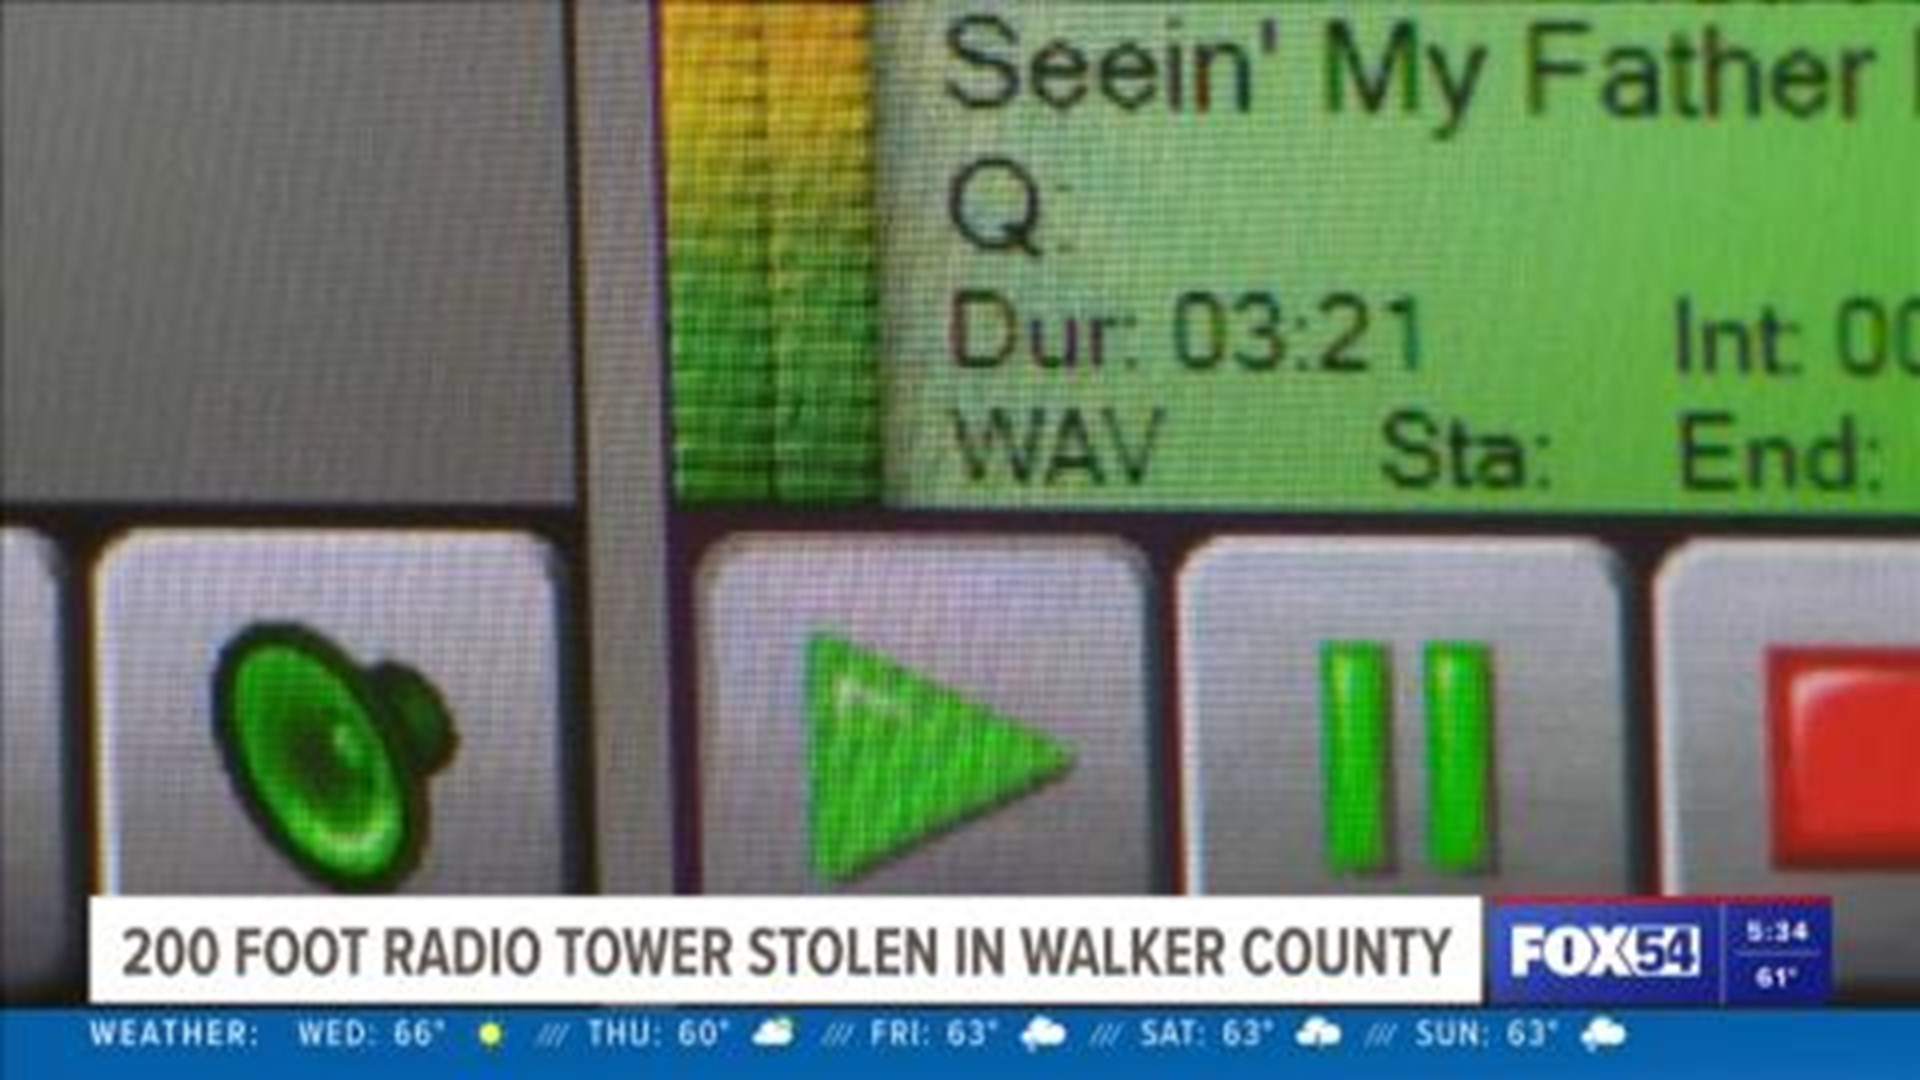 A 200 foot radio tower belonging to station WJLX was stolen in Walker County, AL.